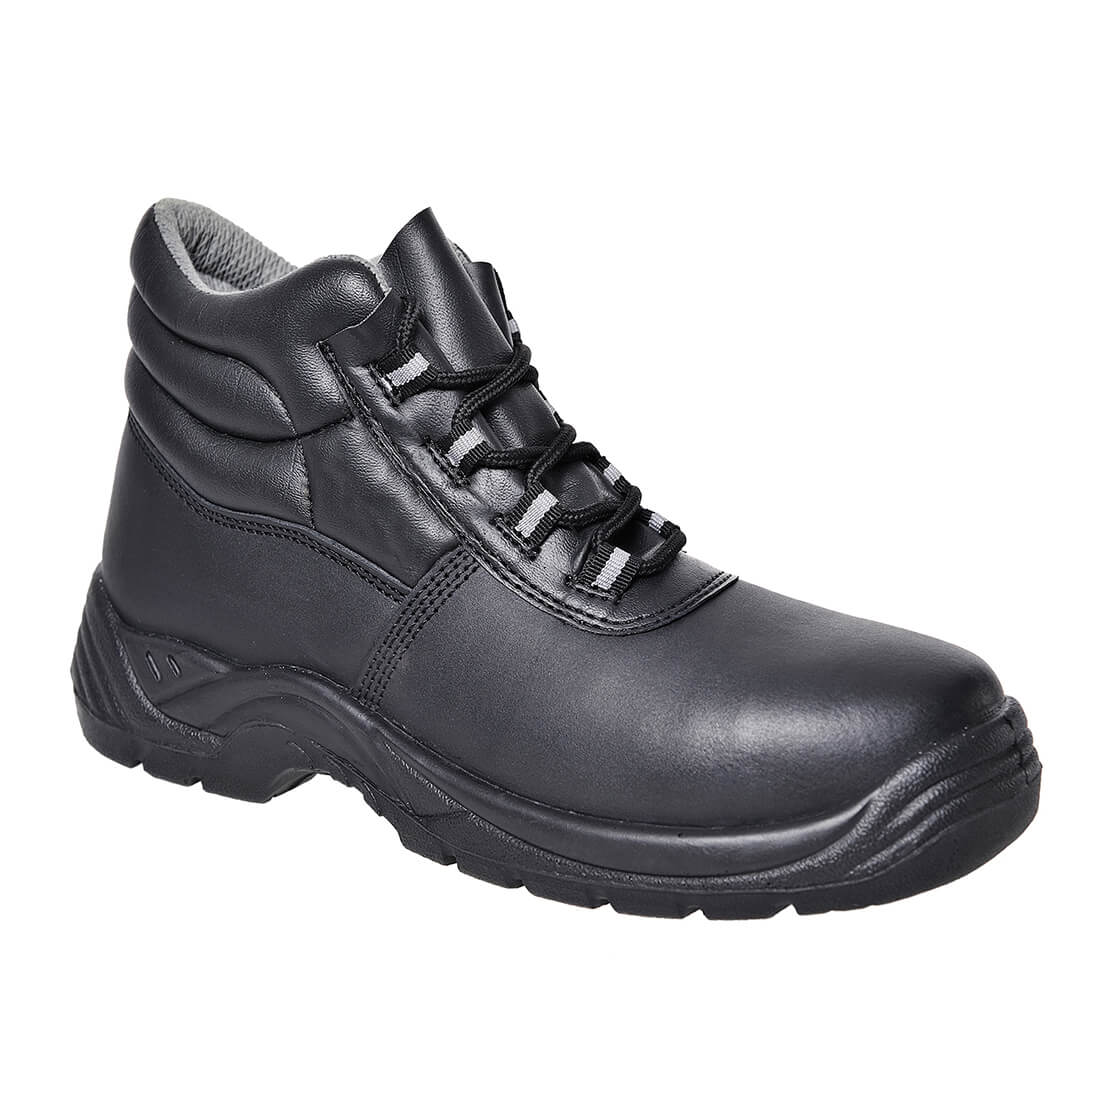 Portwest Compositelite S1 Metal Free Safety Boots Black Size 10